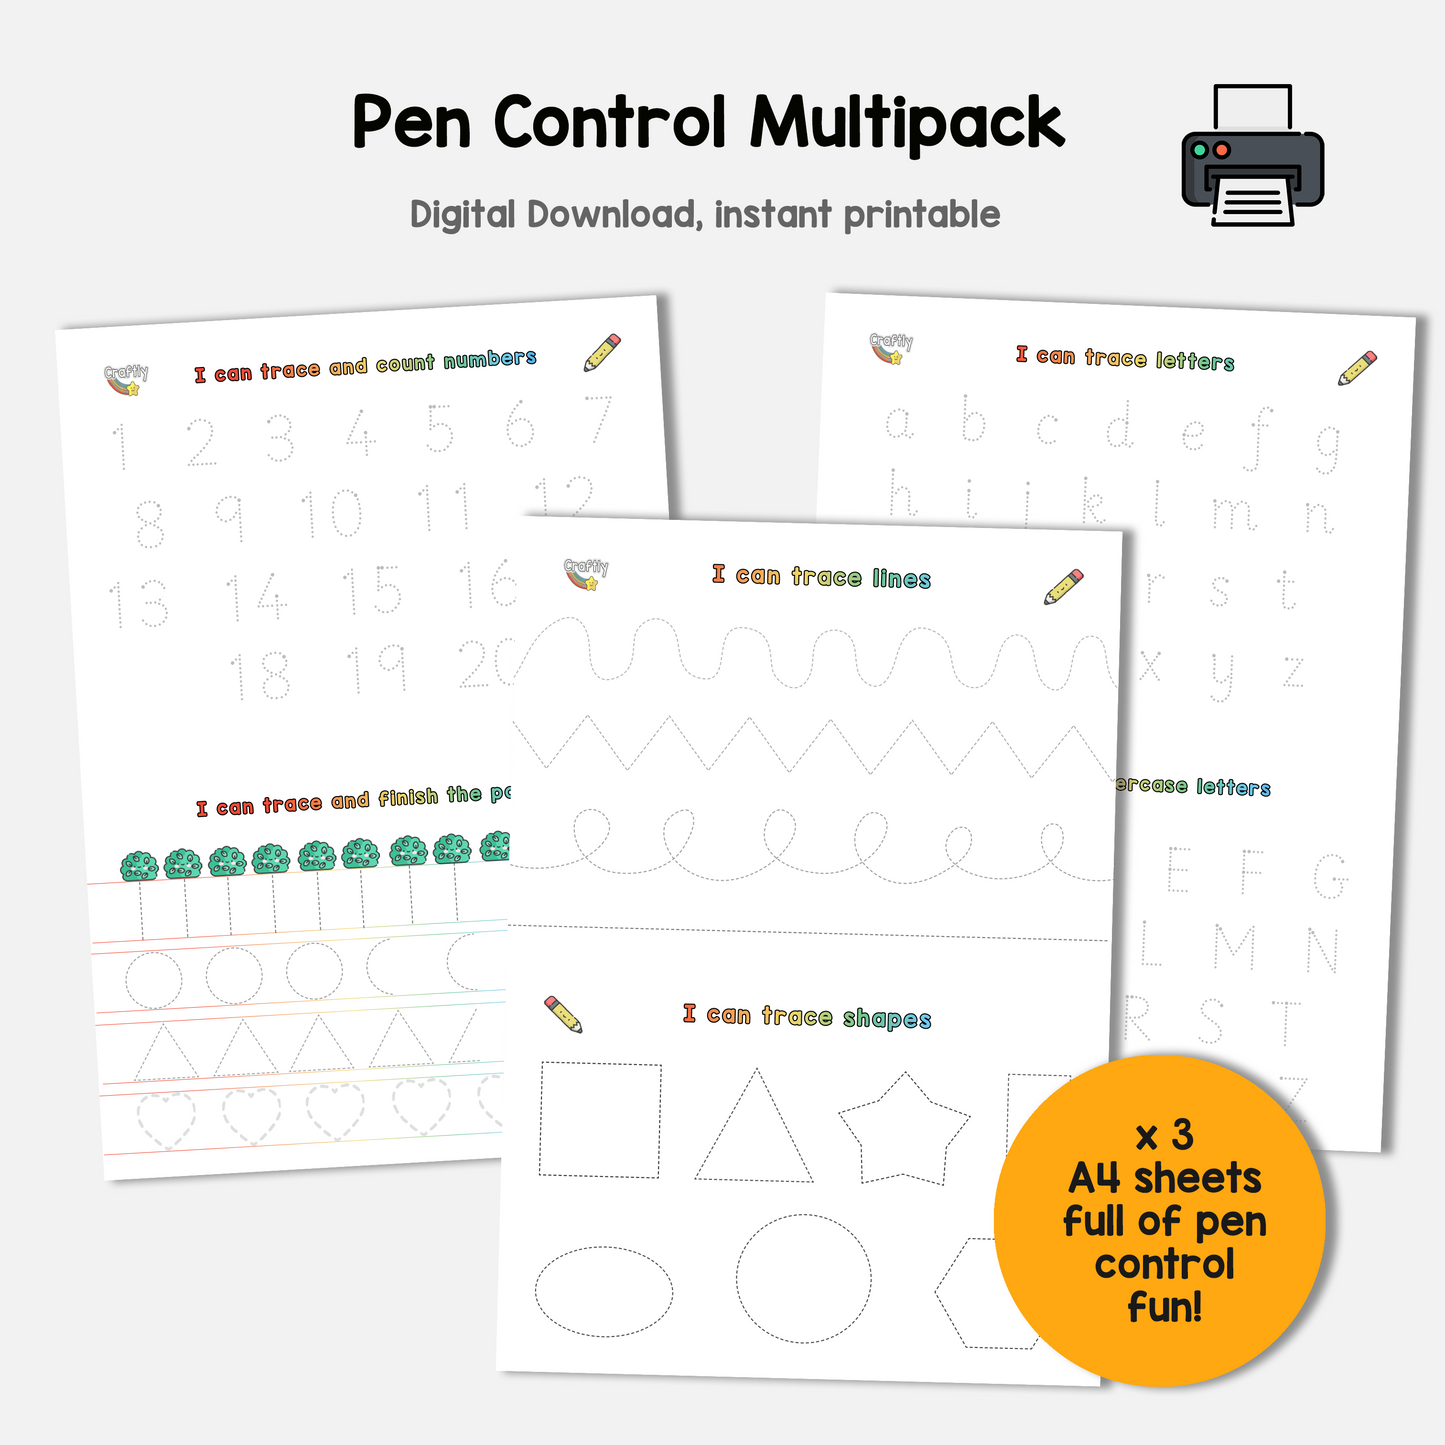 Pen Control Multipack